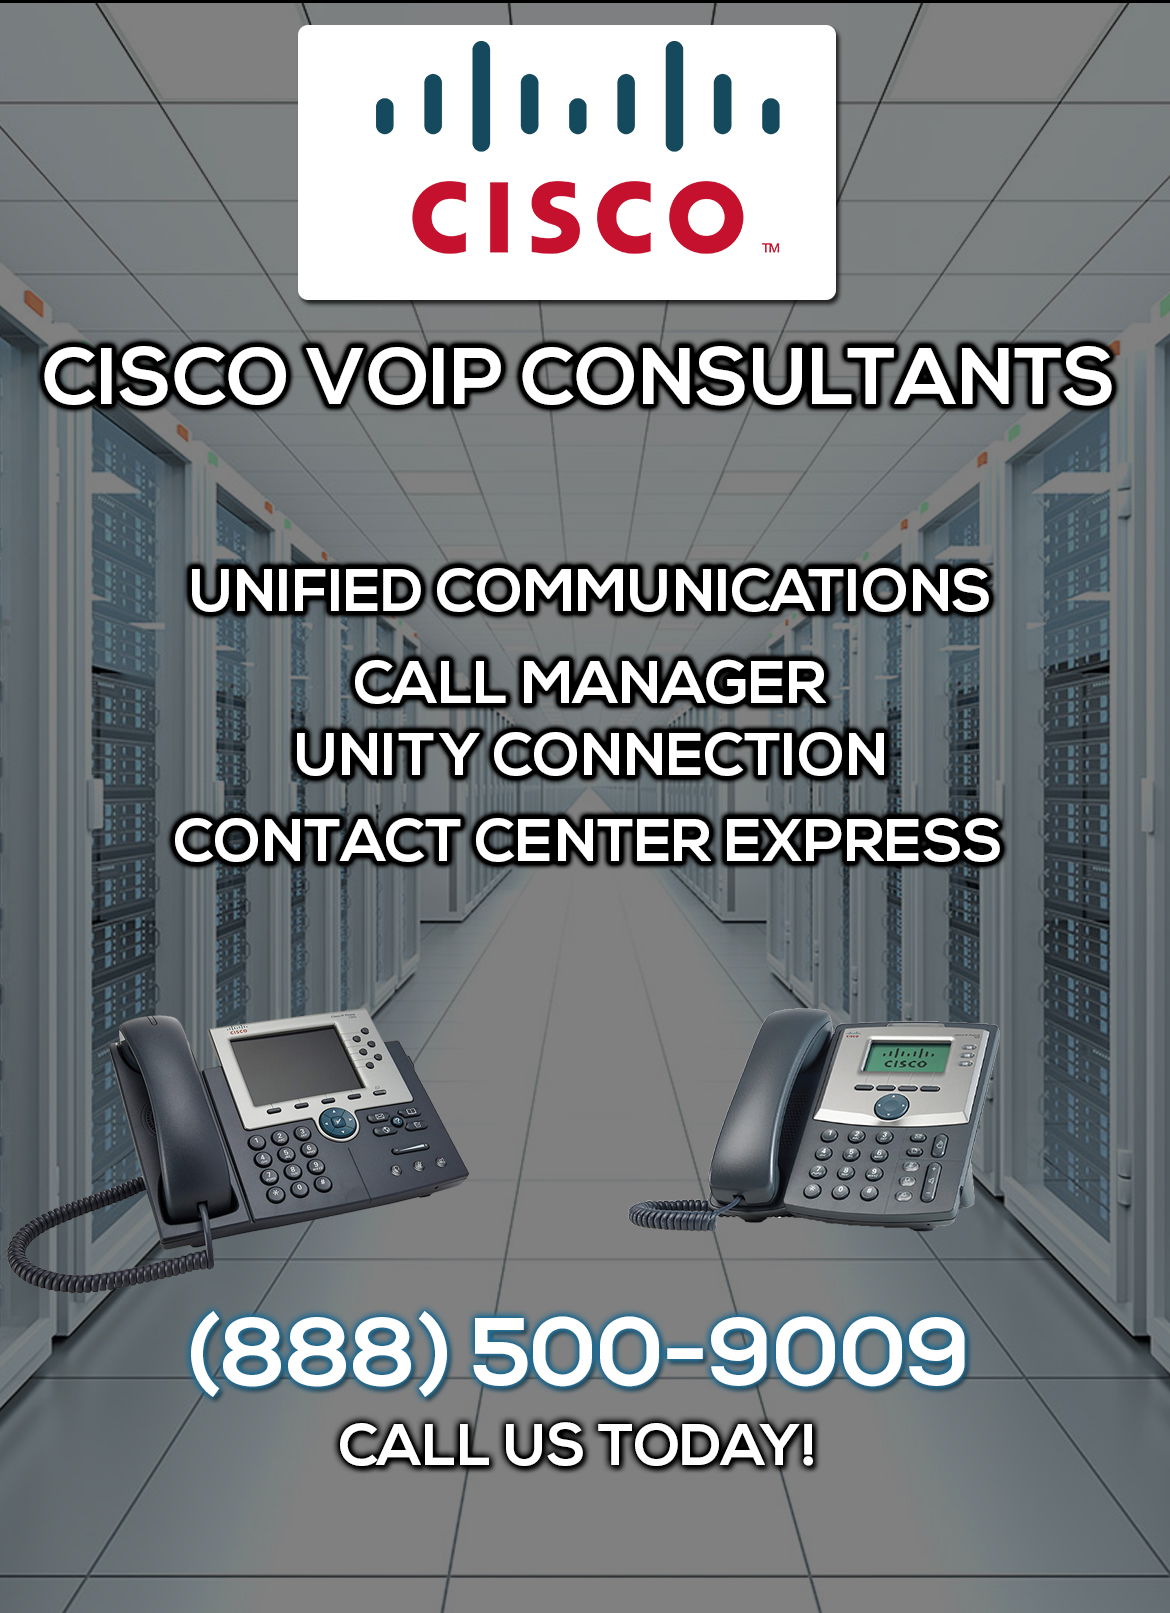 Cisco VoIP Consultants West Covina